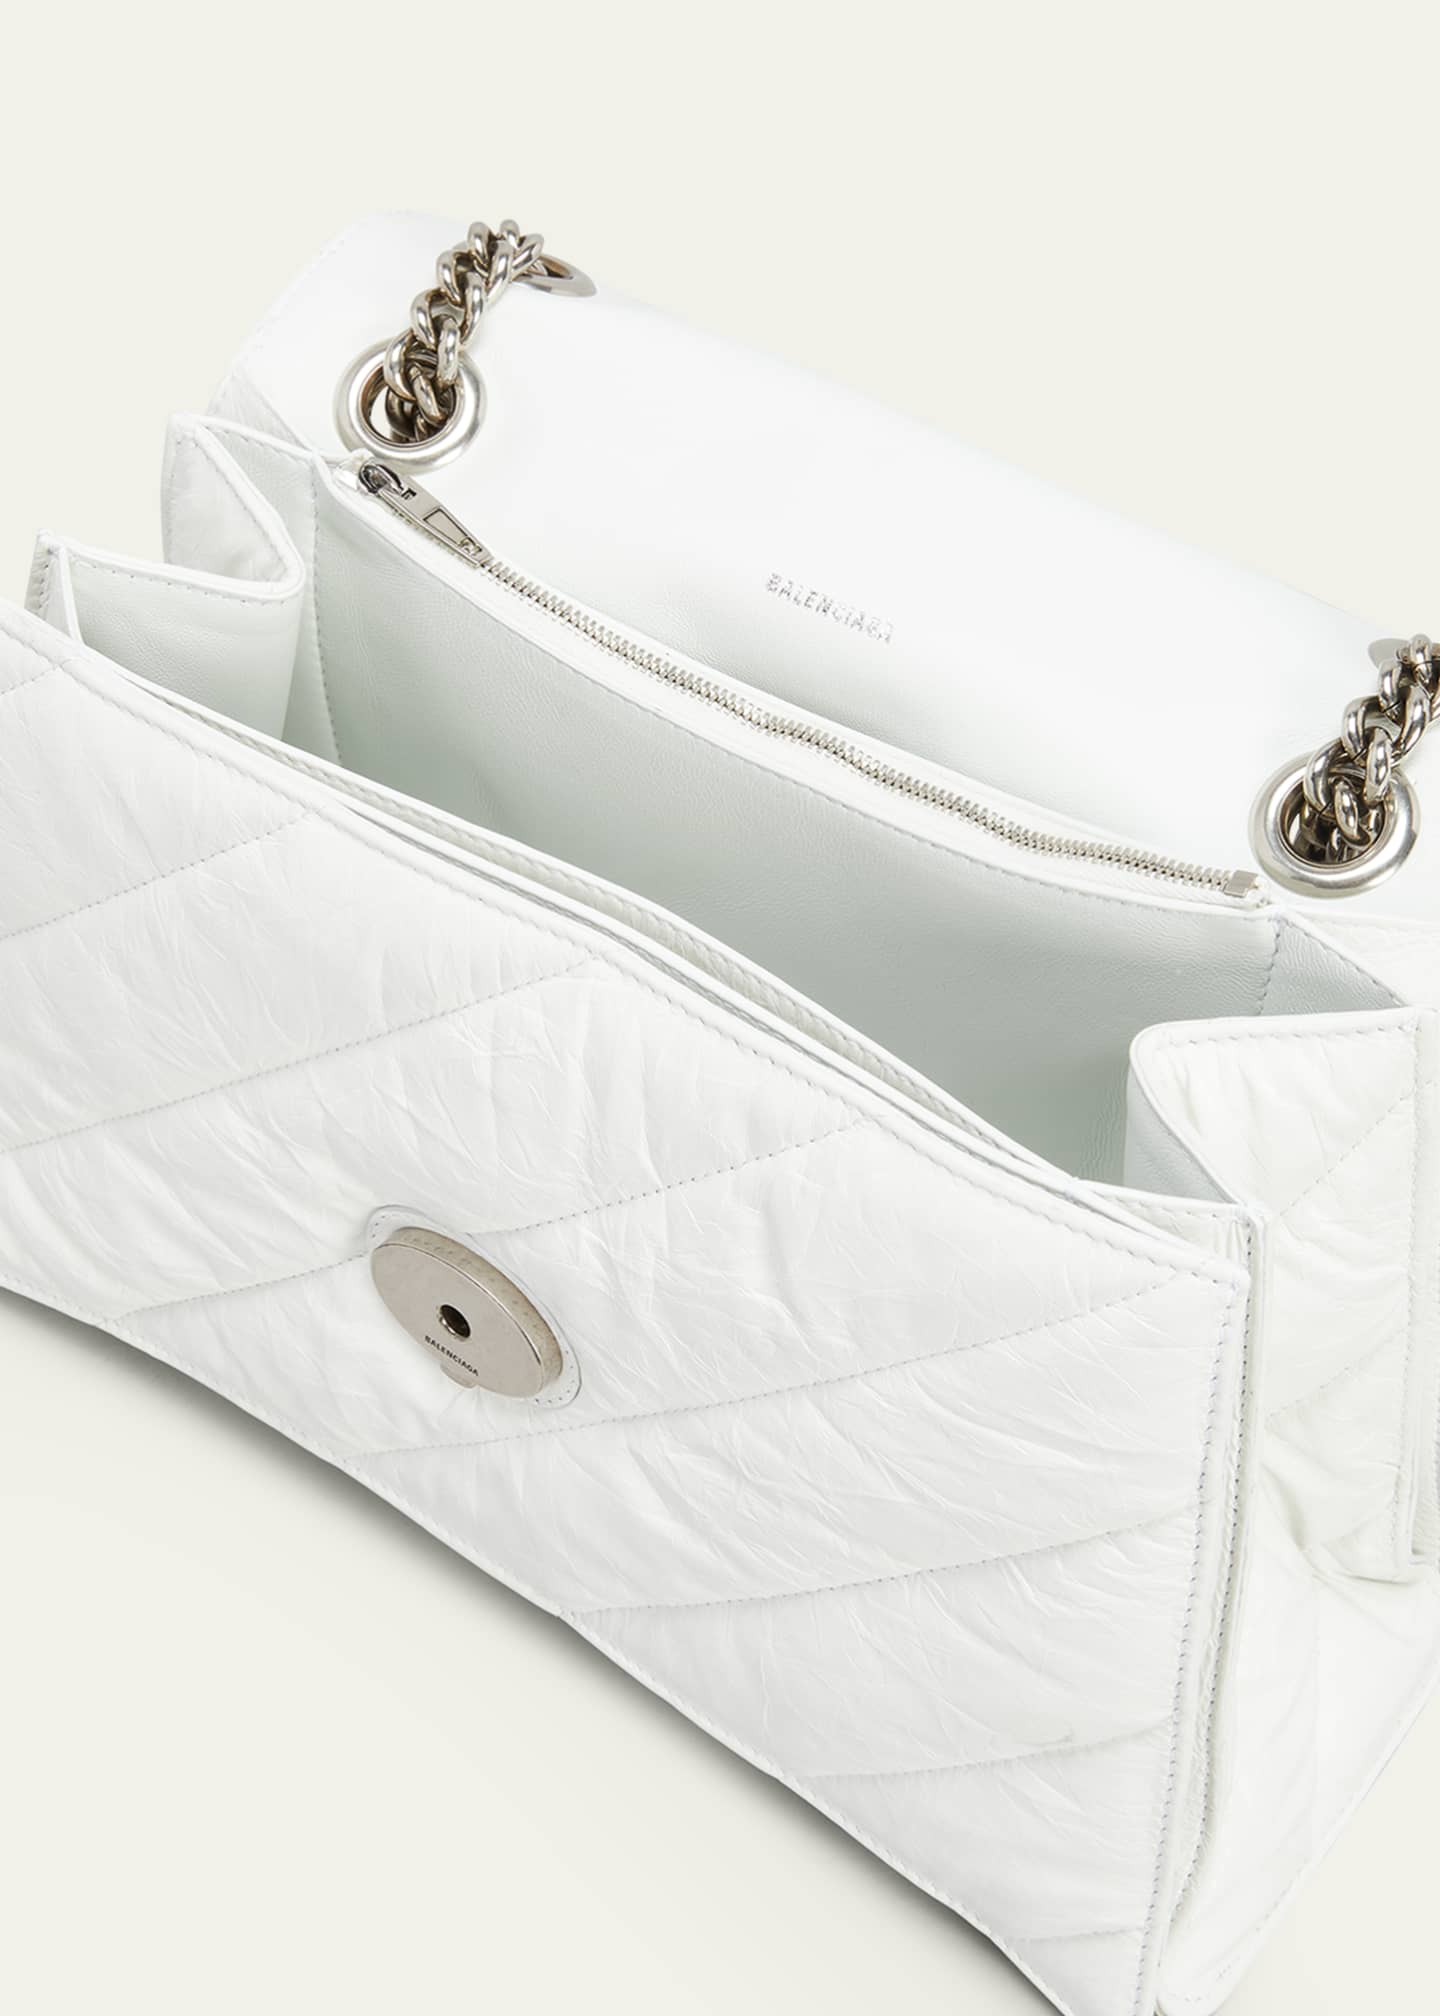 Balenciaga BB Chain Shoulder Bag - Luxe Du Jour